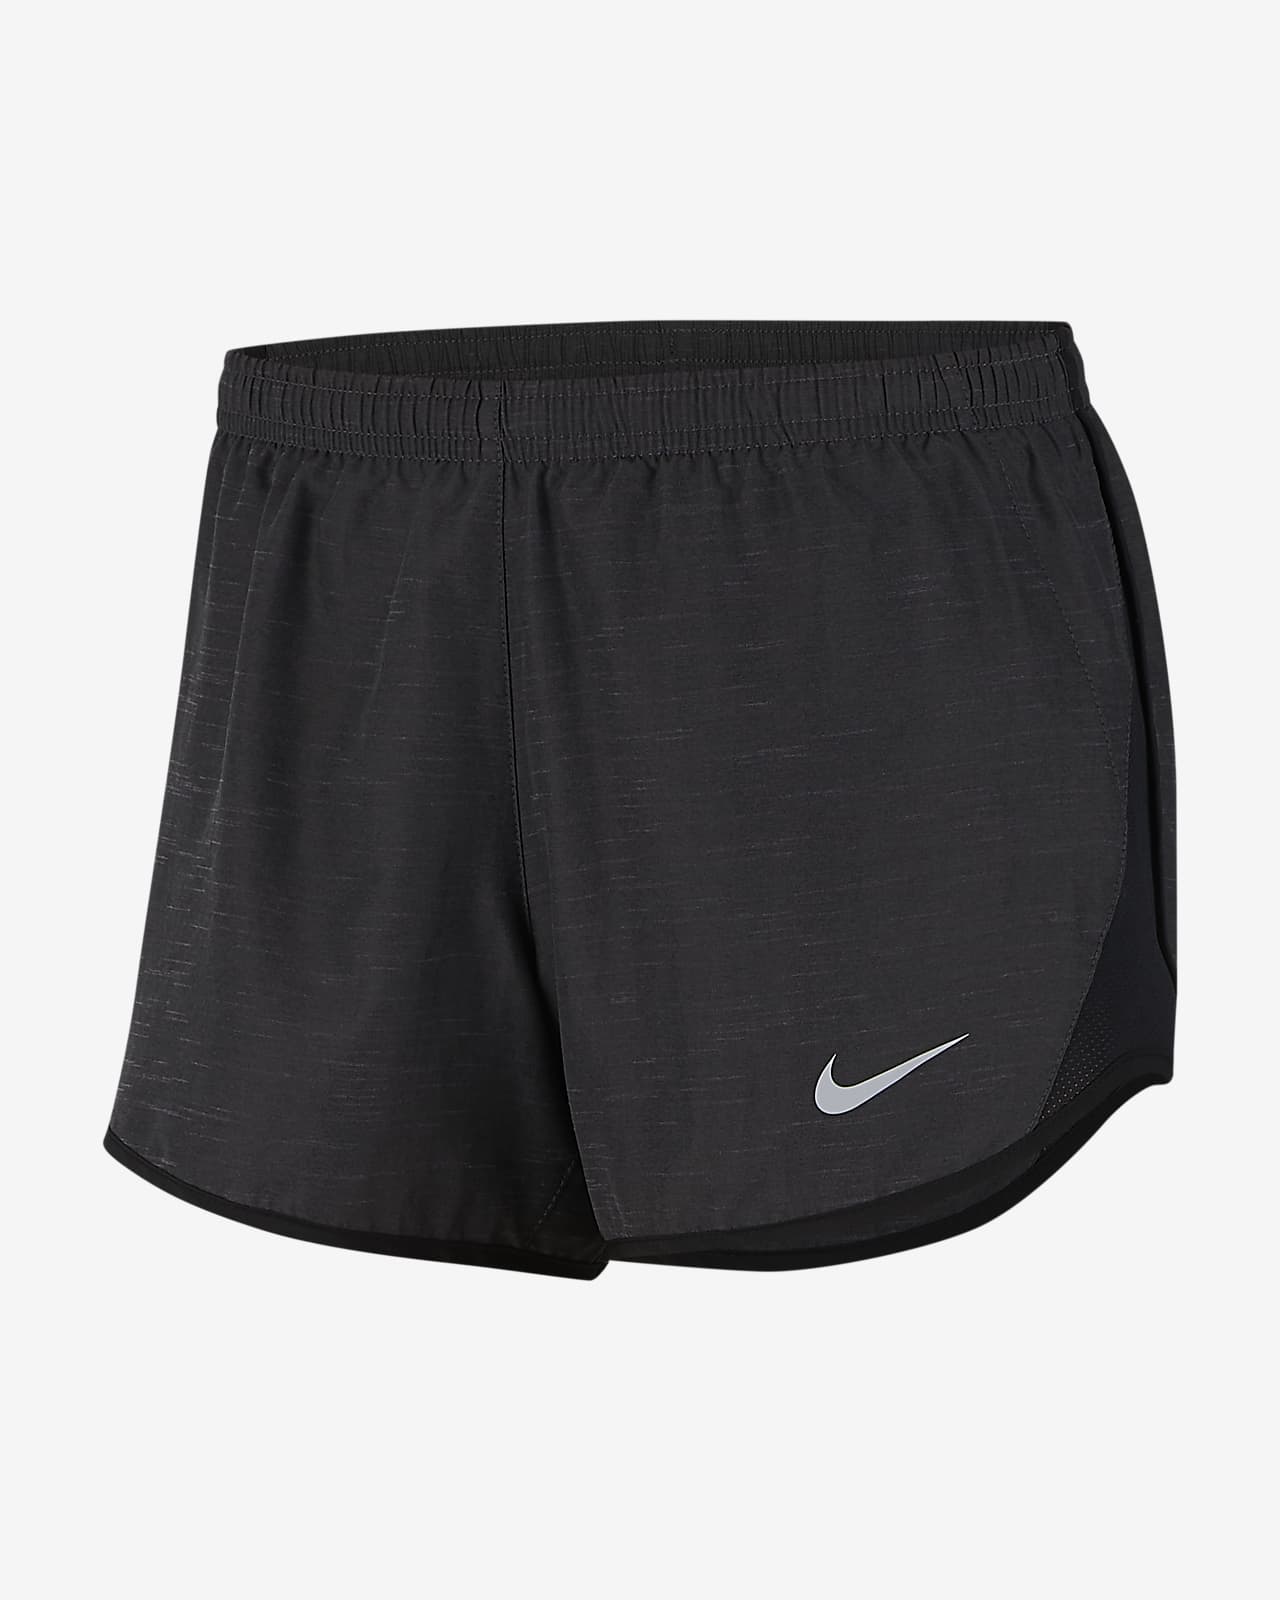 Nike Dri-FIT Women's Running Shorts